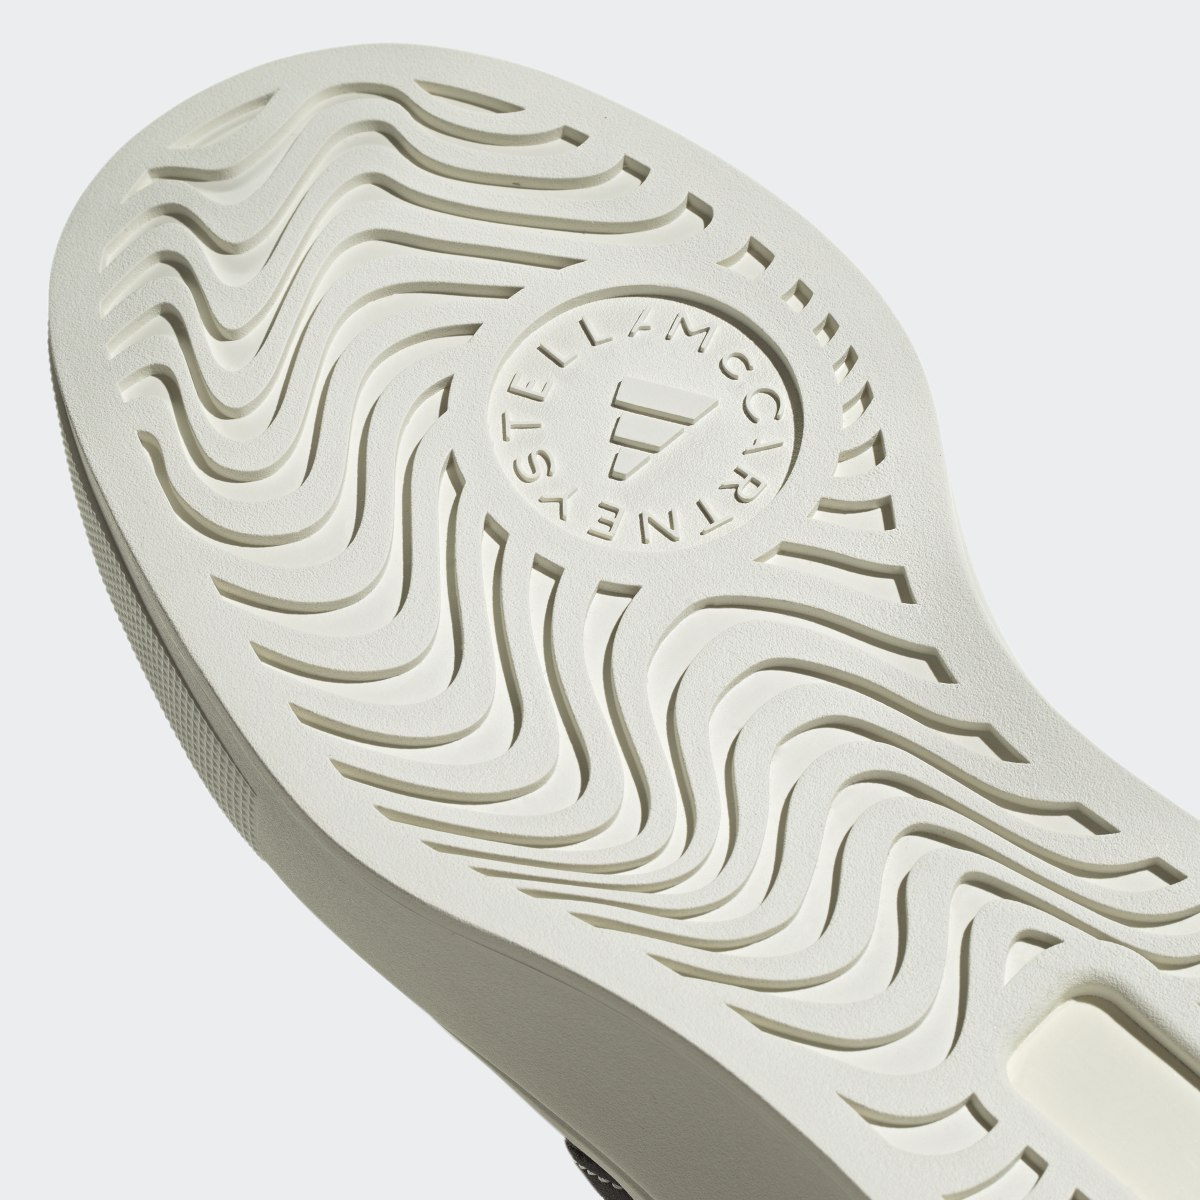 Adidas by Stella McCartney Court Slip-On Shoes. 10